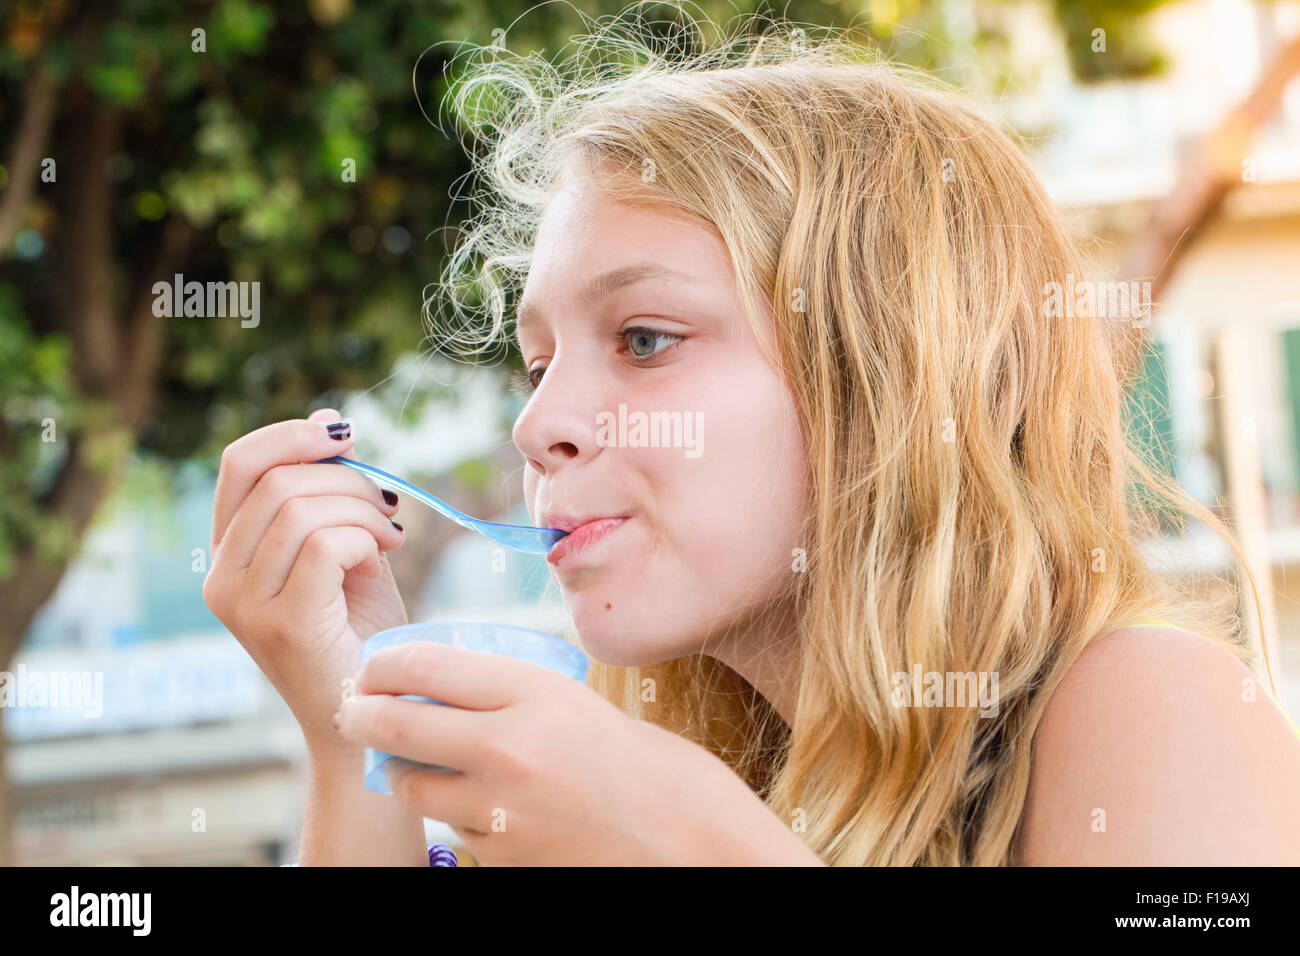 Blond Caucasian teenage girl eats frozen yogurt, closeup outdoor portrait with natural light Stock Photo